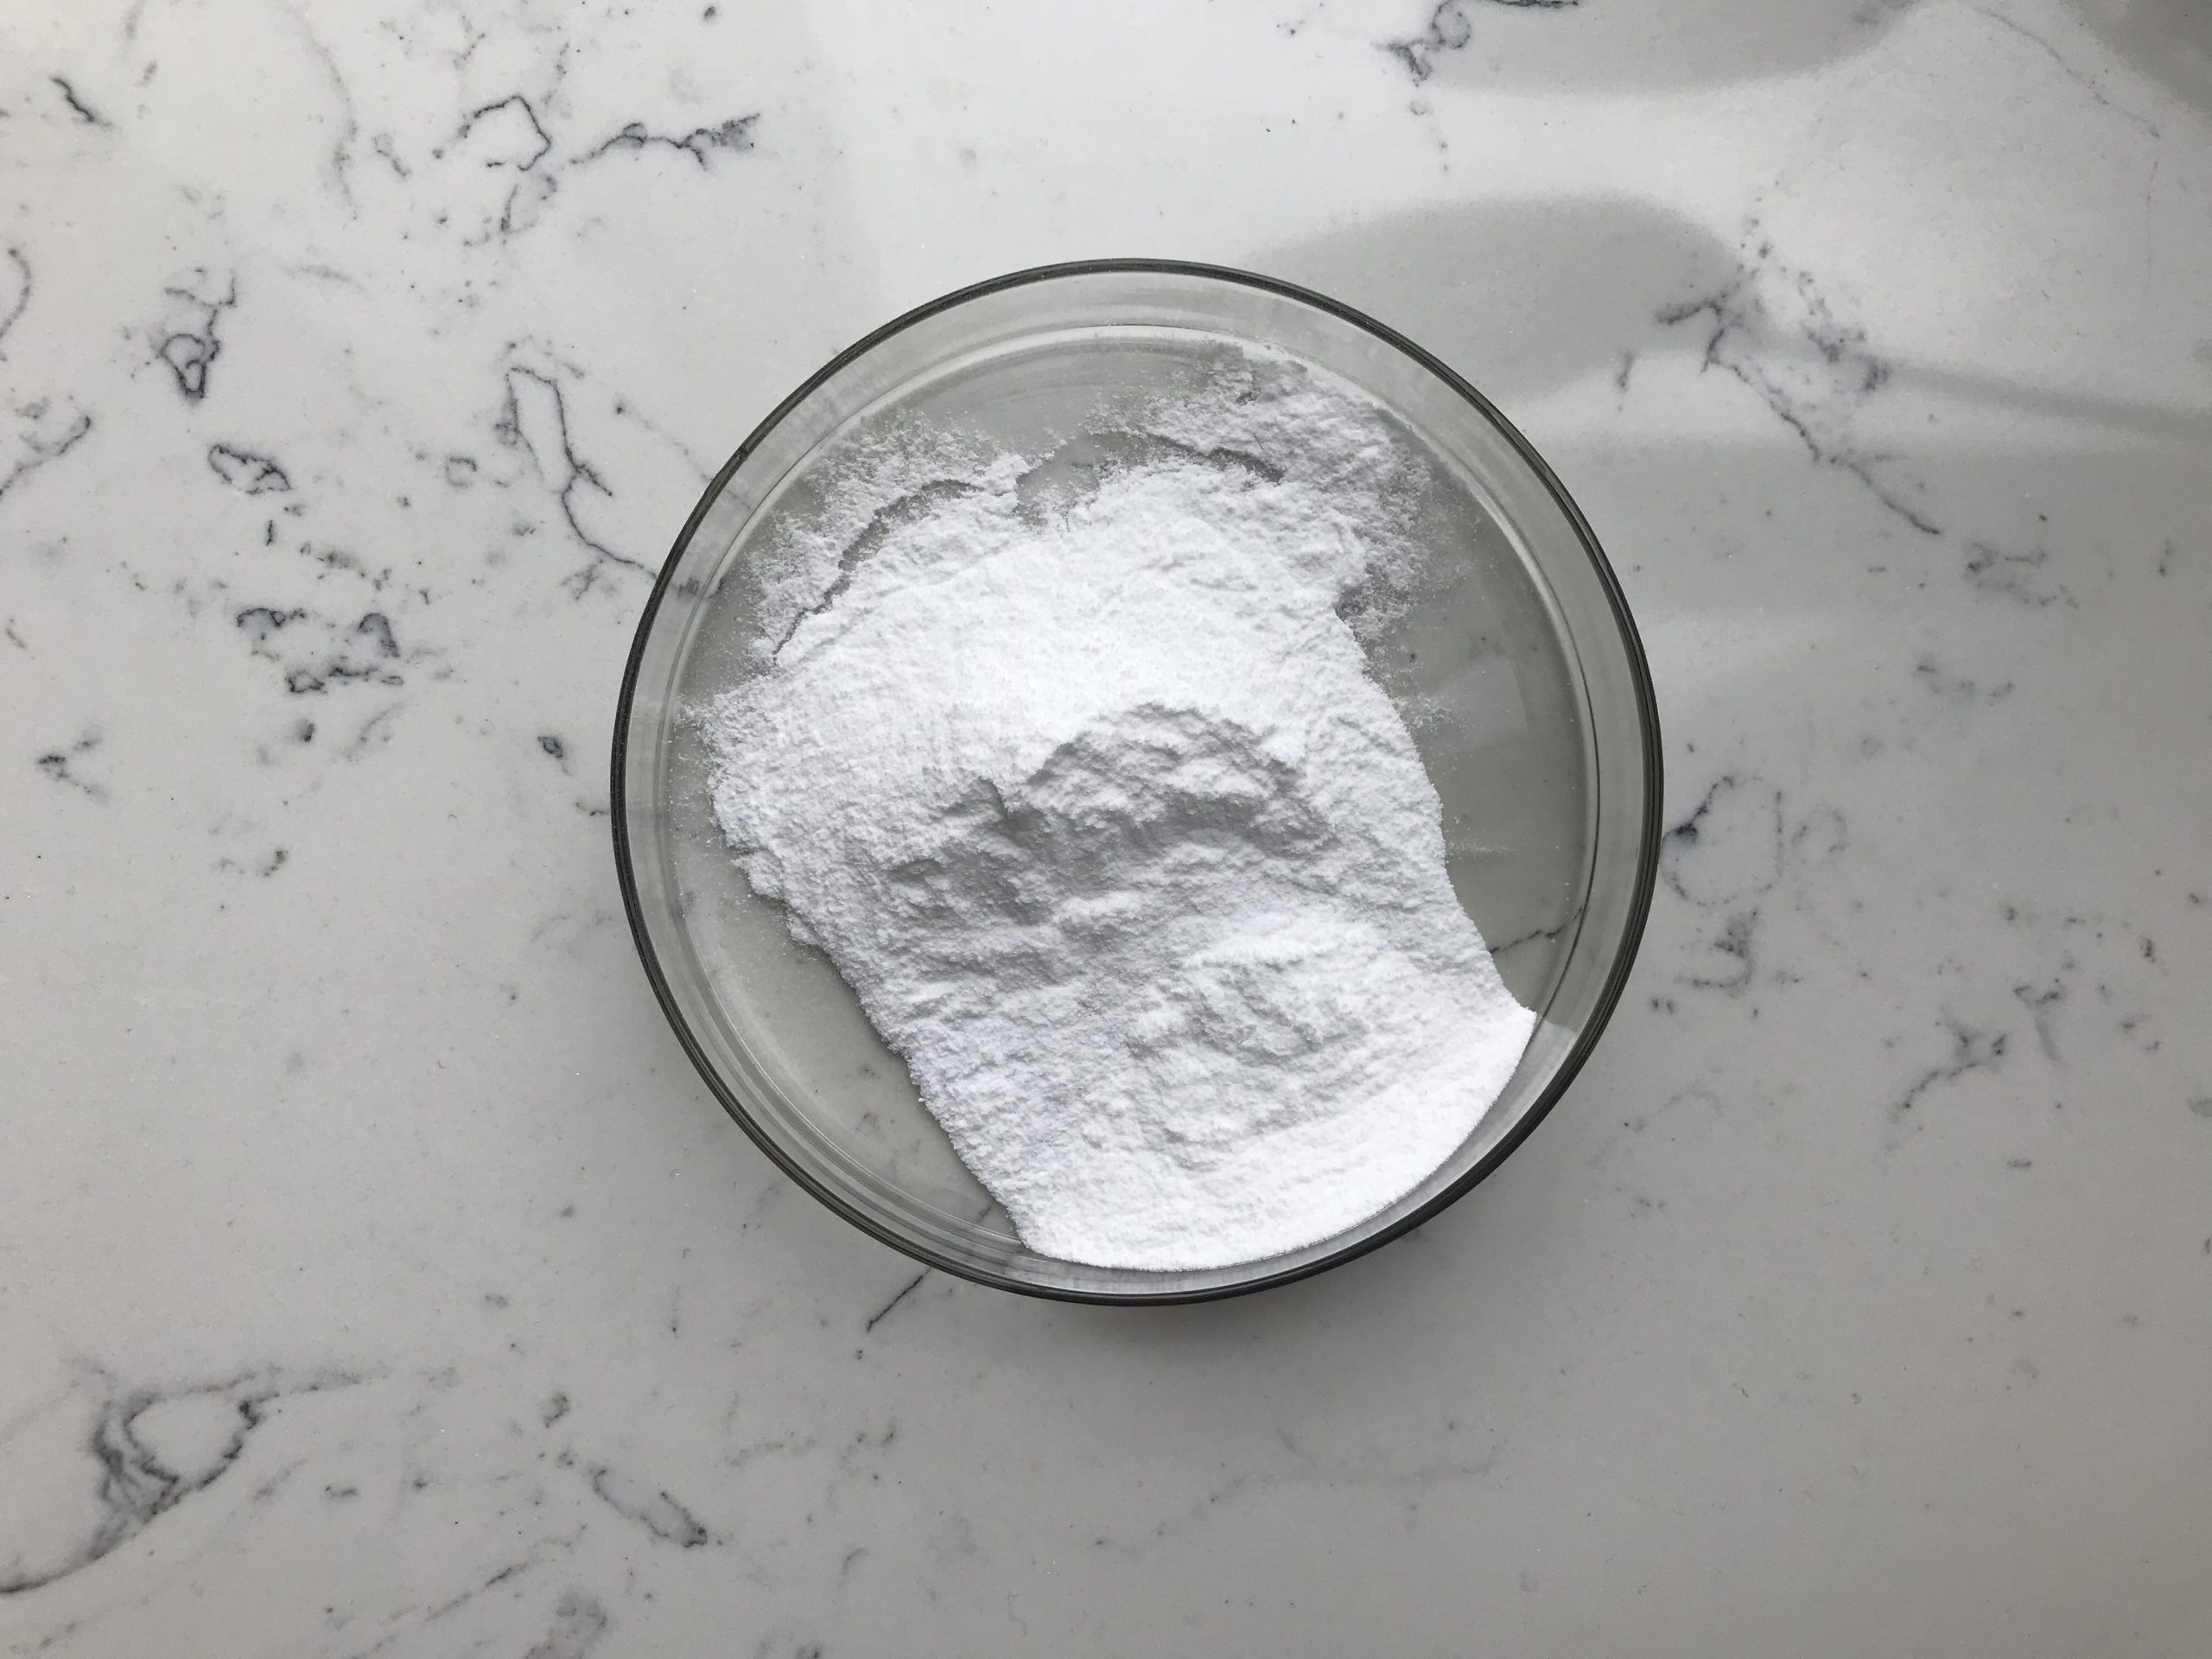 thaumatin powder manufacturer-Xi'an Lyphar Biotech Co., Ltd